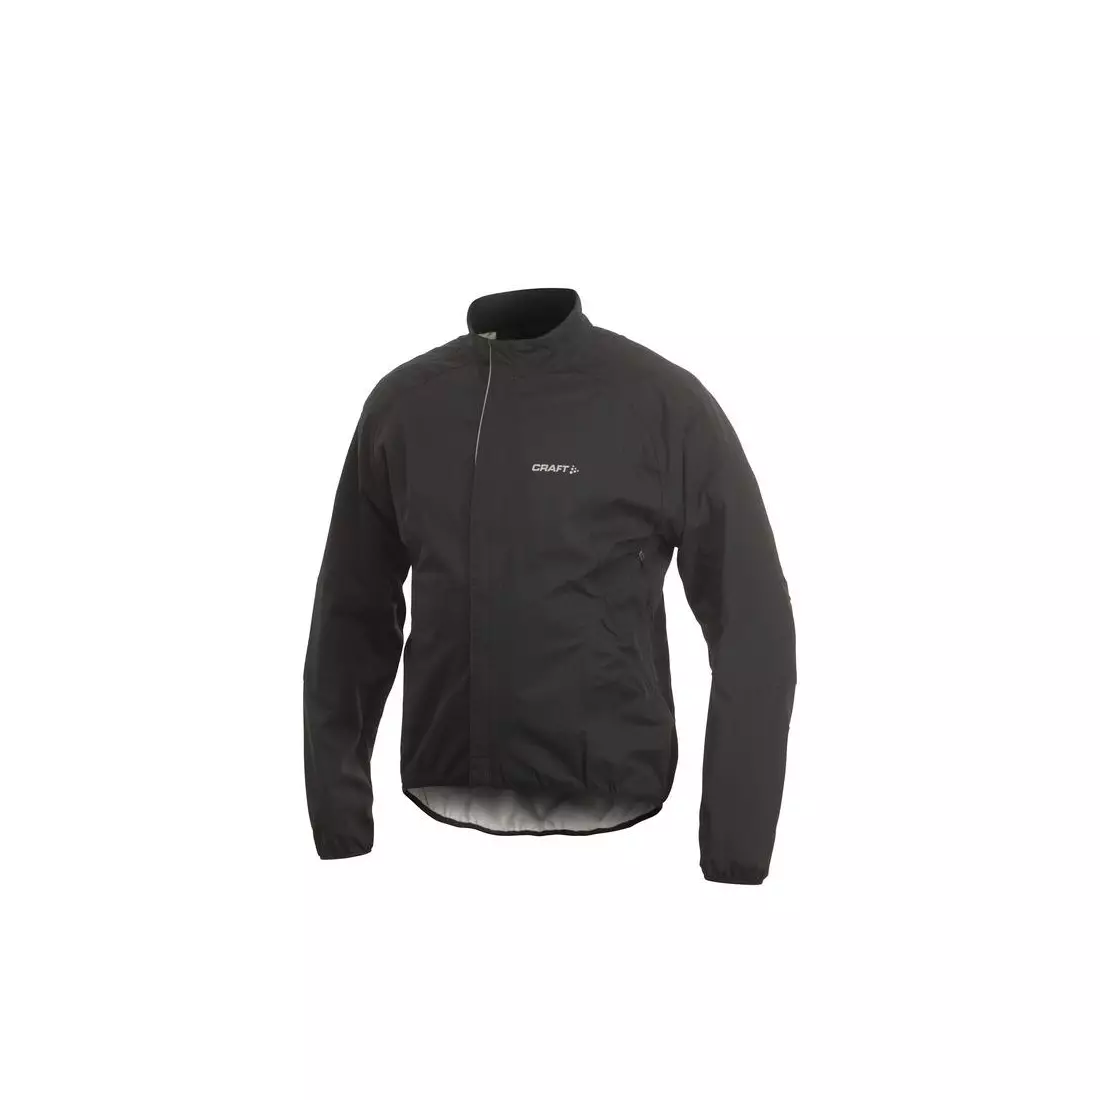 CRAFT 194399 ACTIVE - cycling jacket, rainproof